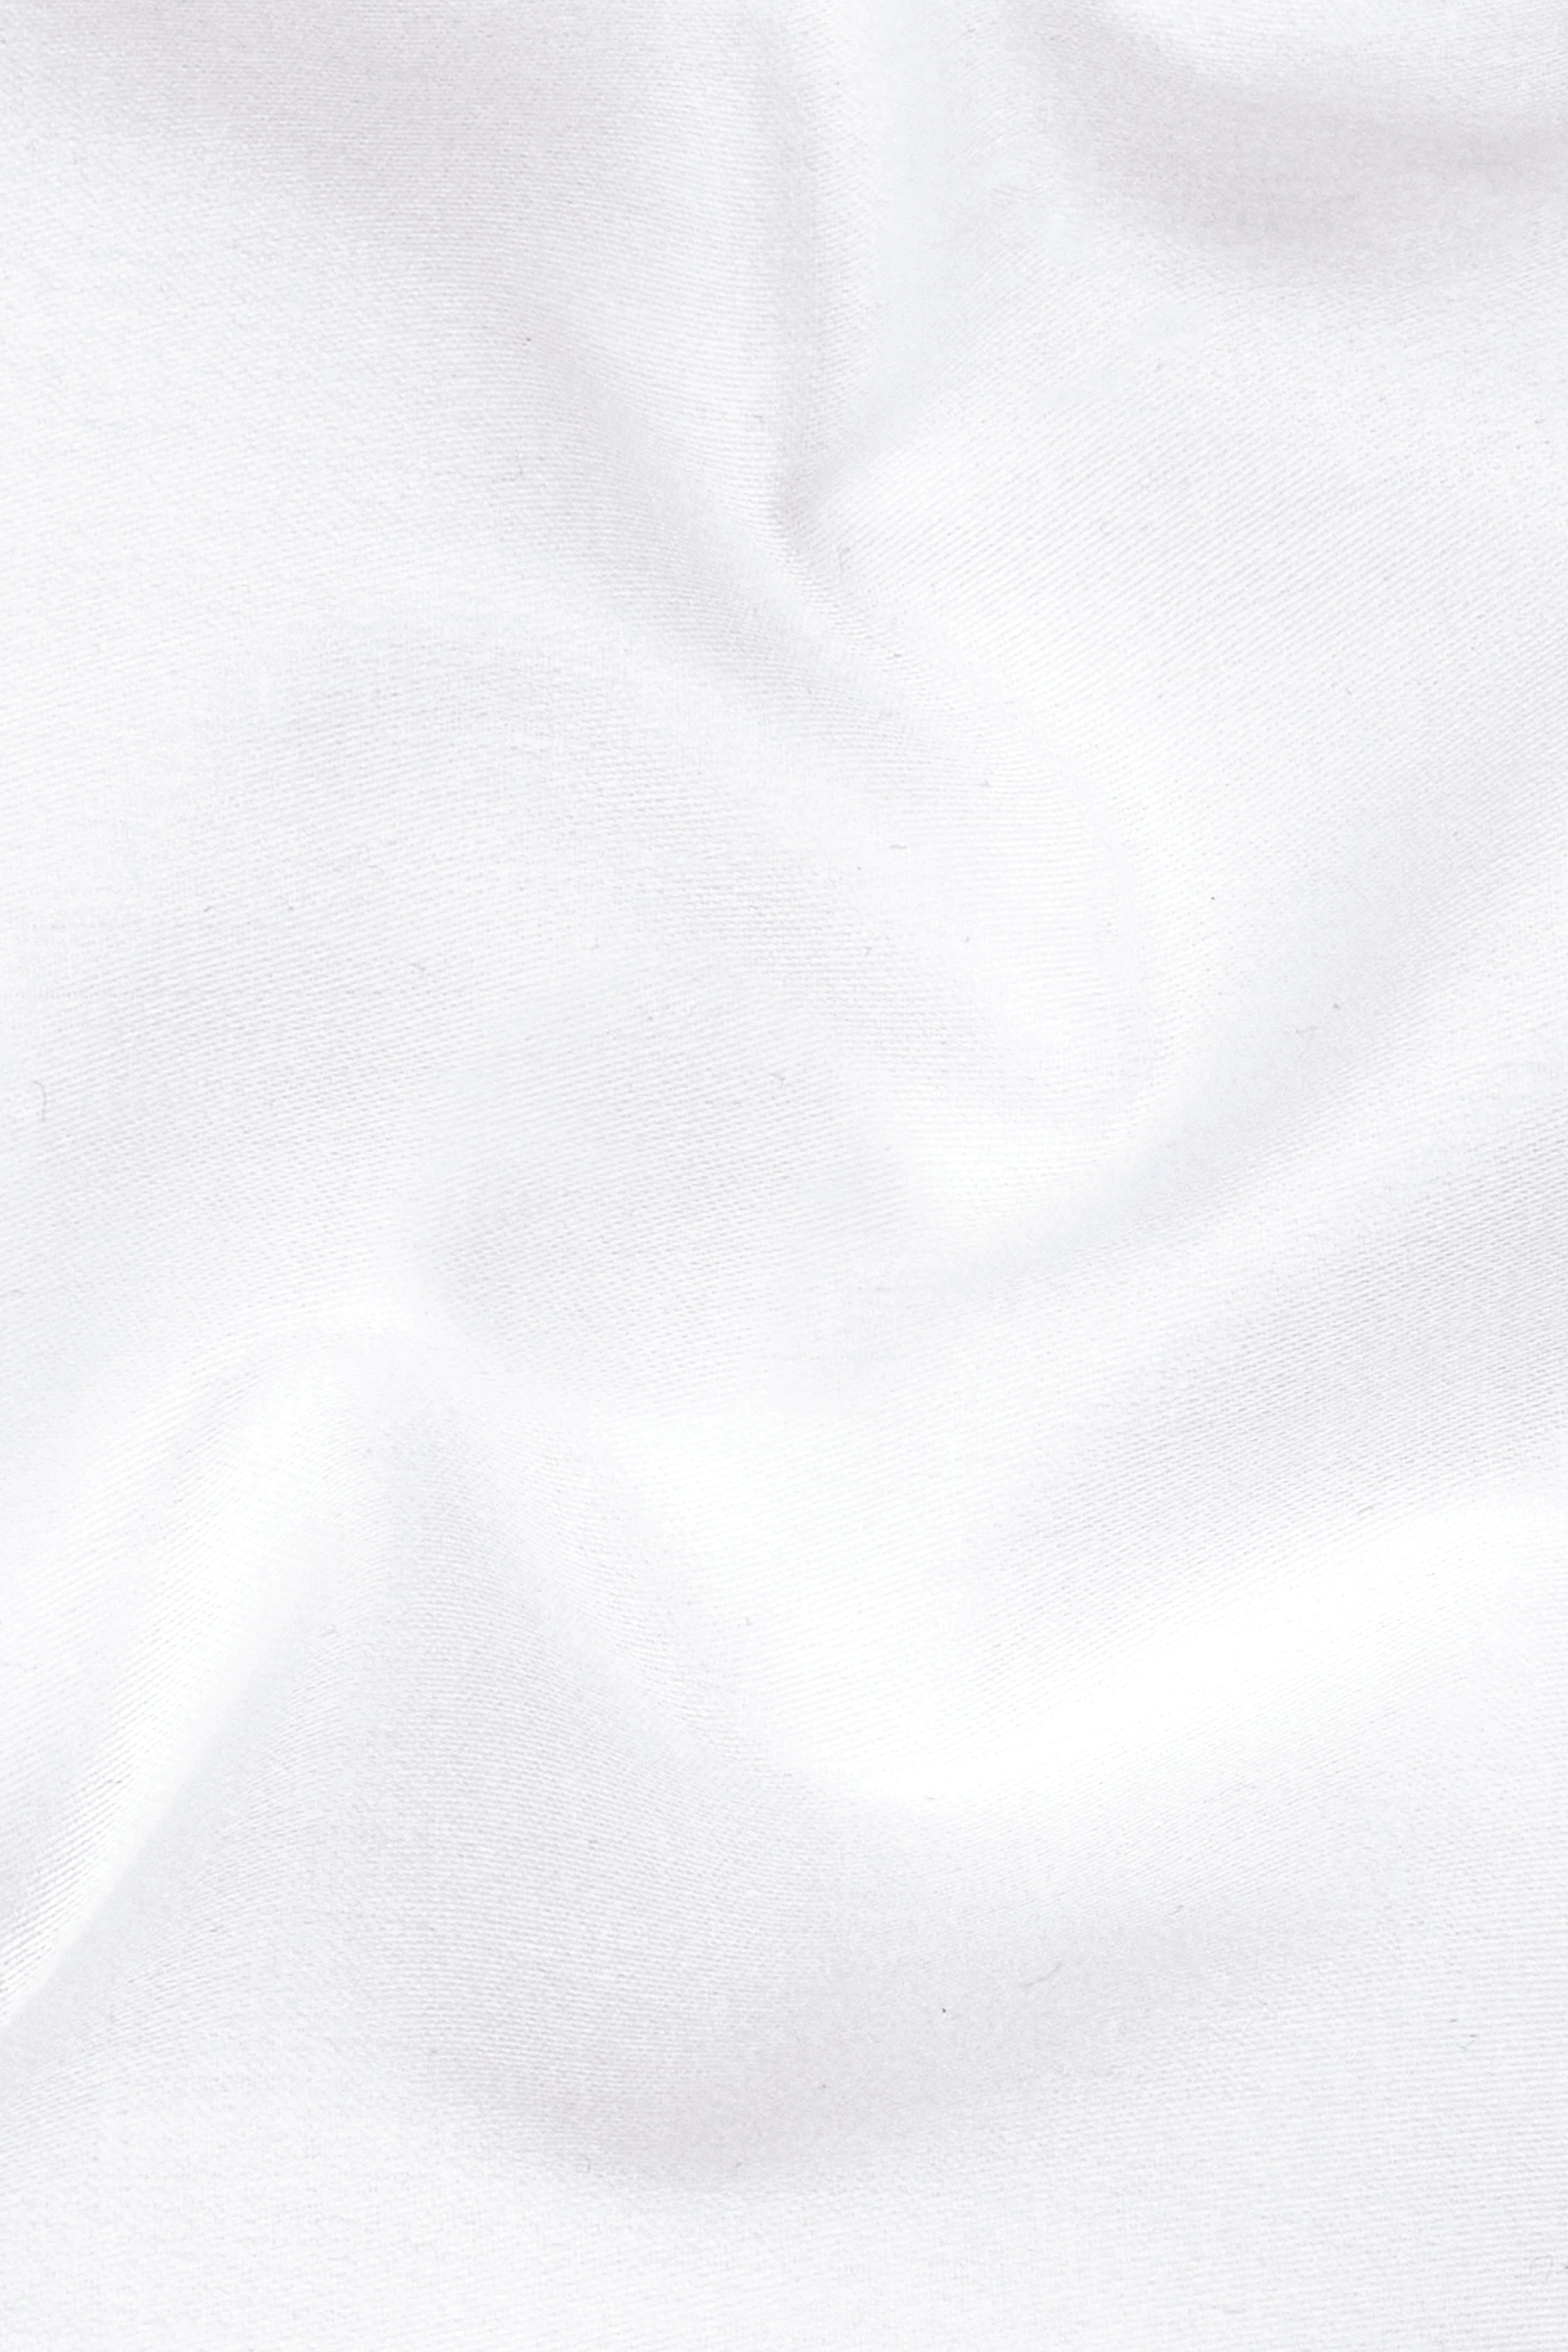 Bright White Subtle Sheen with Tricolour Embroidered Above Pocket Super Soft Premium Cotton Shirt